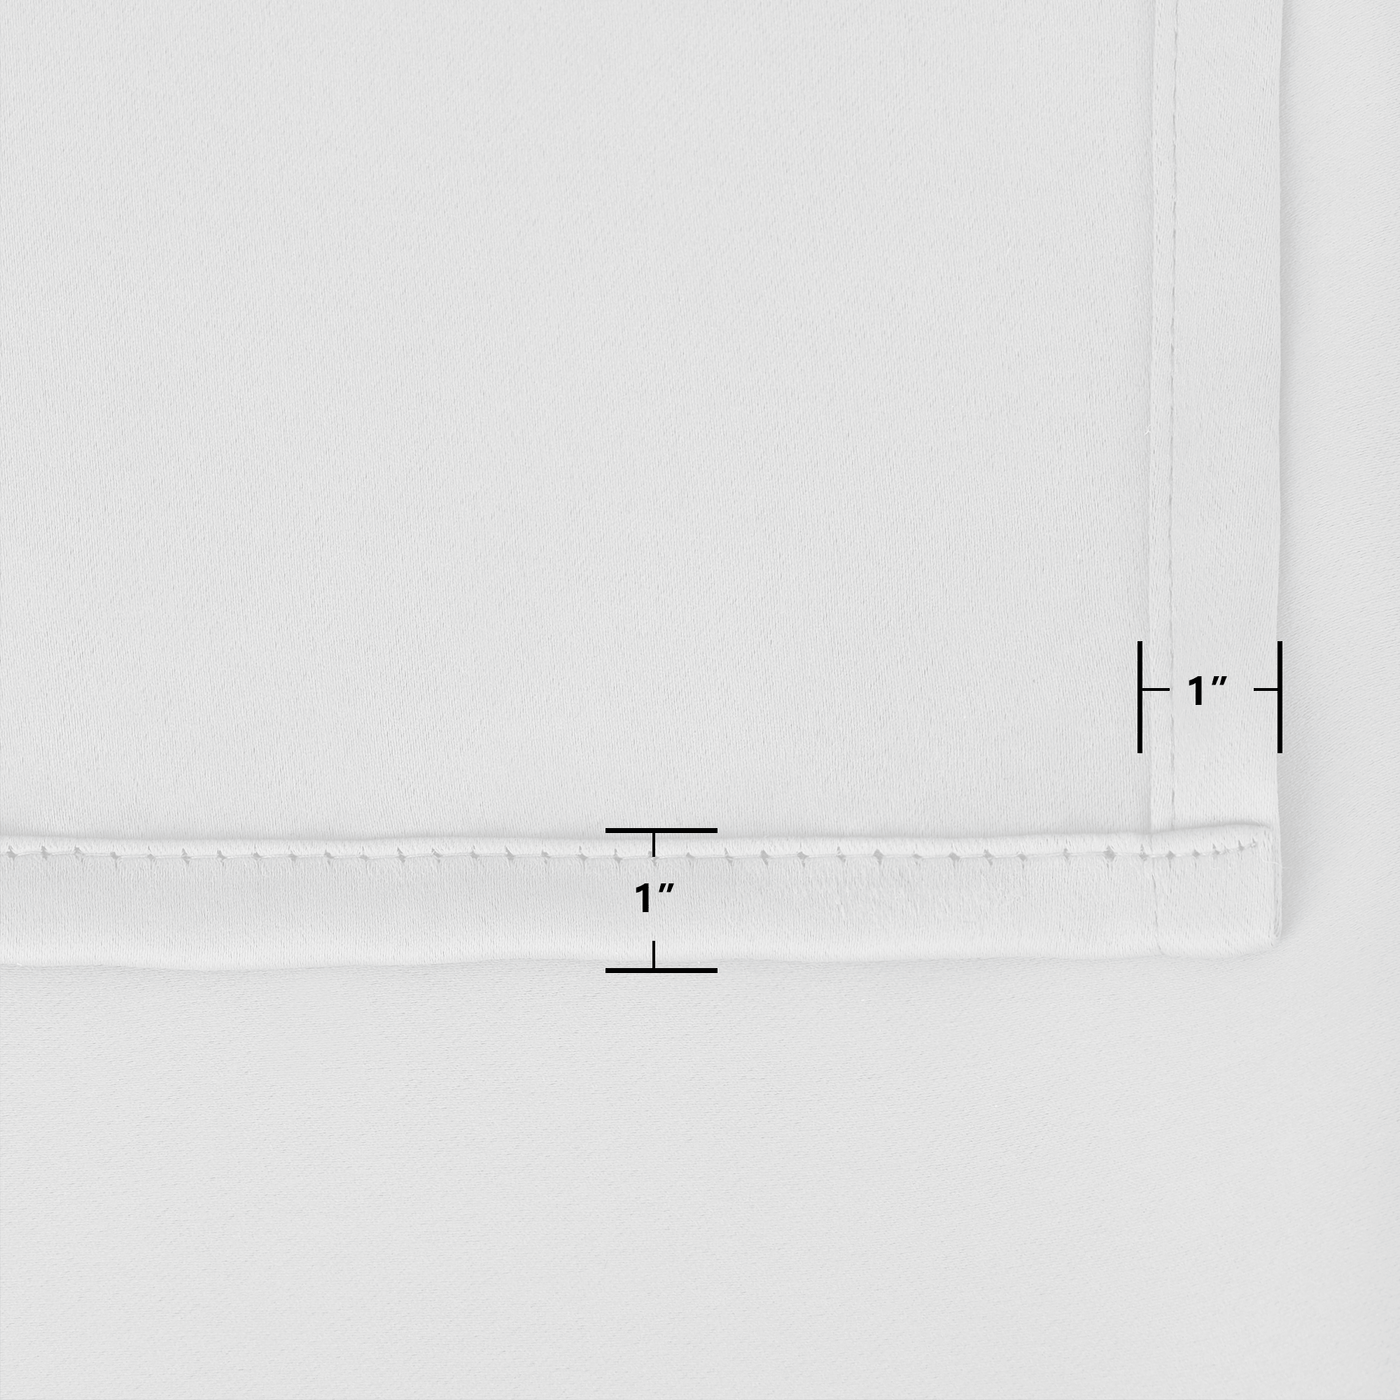 Outdoor Curtains Waterproof Grommet Top 1 Panel - White